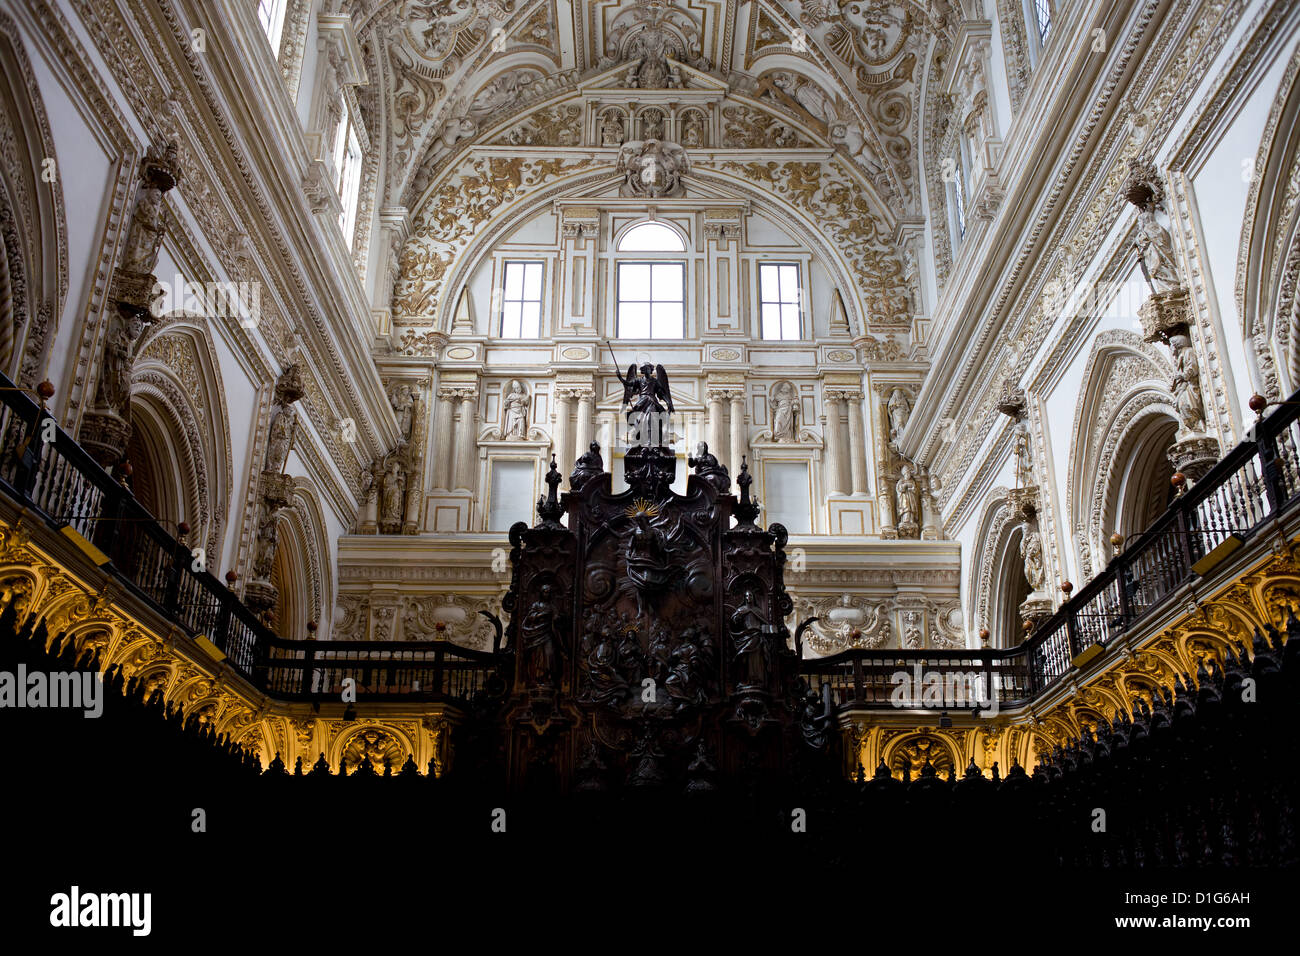 Interior of the Cathedral Mosque (La Mezquita) in Cordoba, Spain, illuminated mahogany choir stalls. Stock Photo